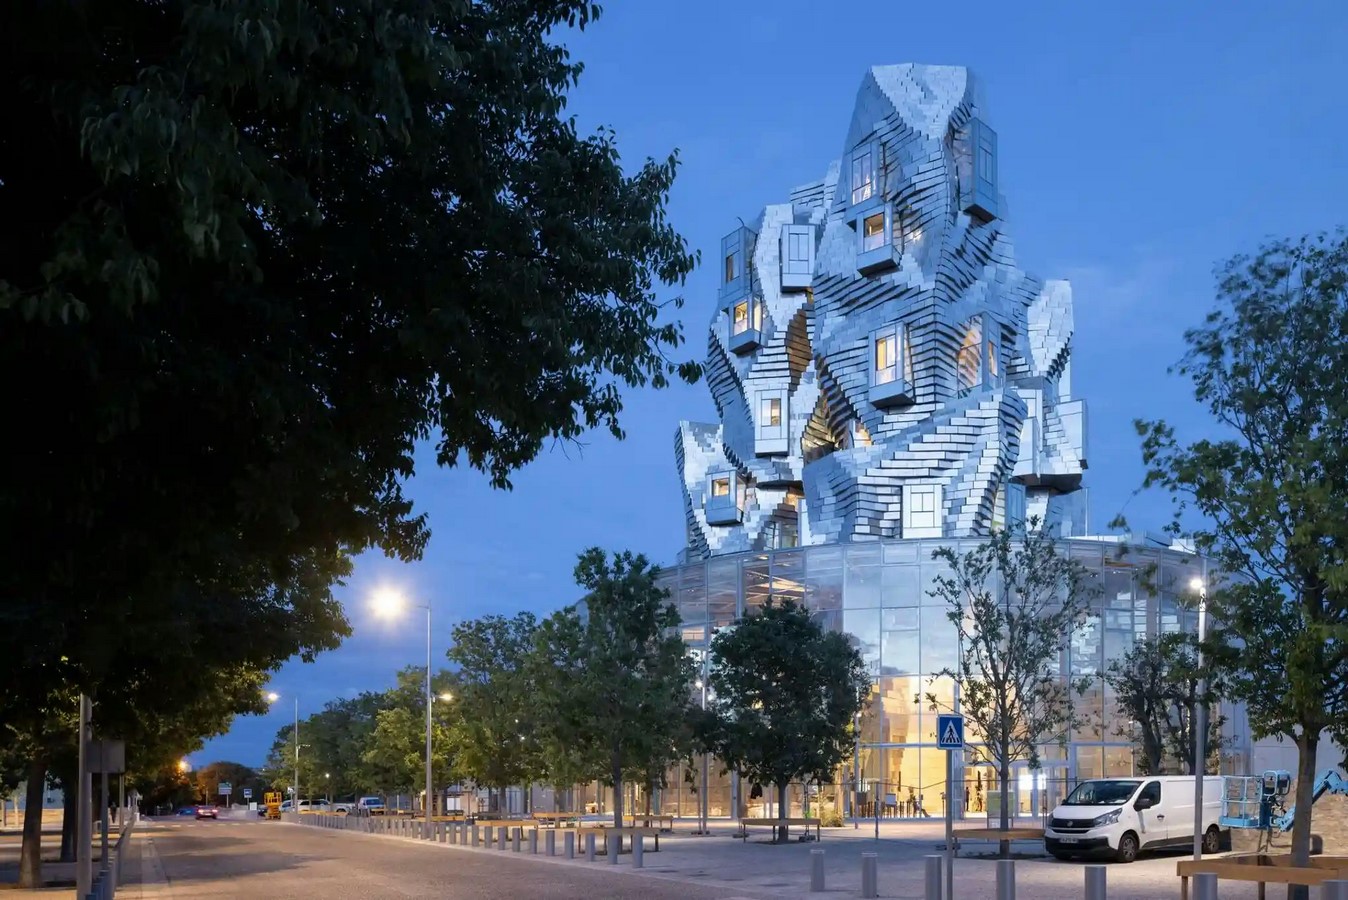 Frank Gehry: The Deconstructivist Architect Who Creates Sculptural Buildings - Sheet15